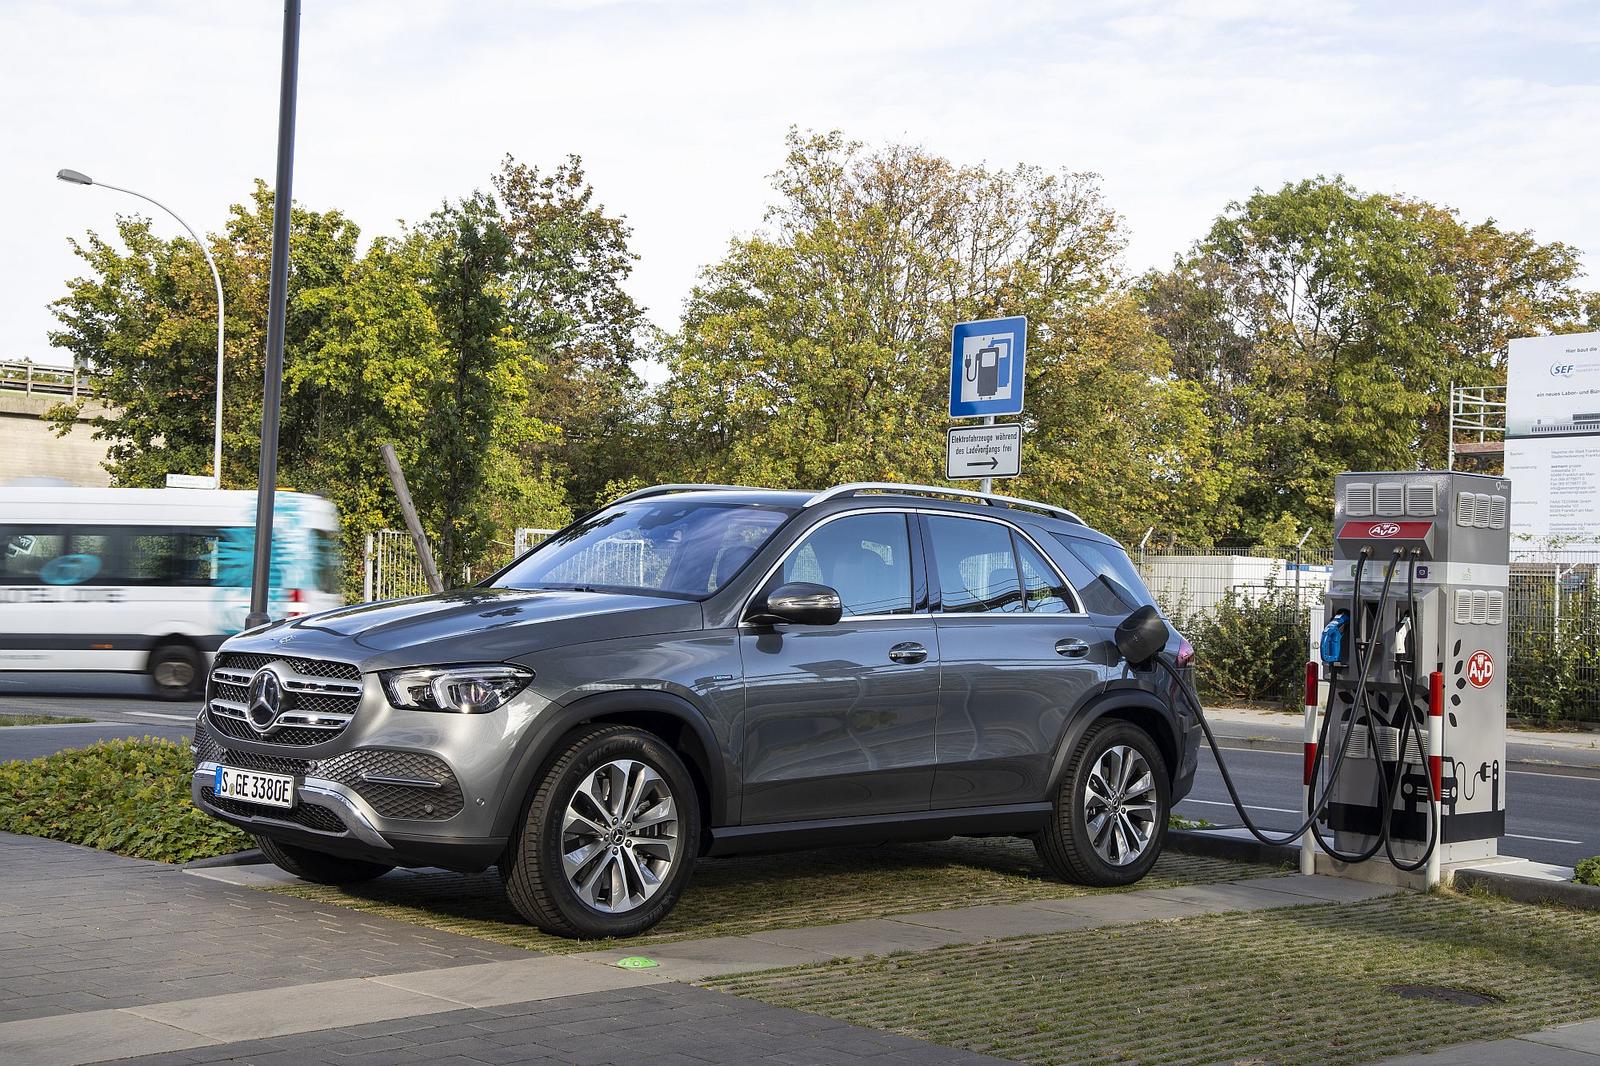 Mercedes-Benz Plug-in hybrids – The New EQ Power Family Frankfurt, September 2019

Mercedes-Benz Plug-in hybrids – The New EQ Power Family Frankfurt, September 2019